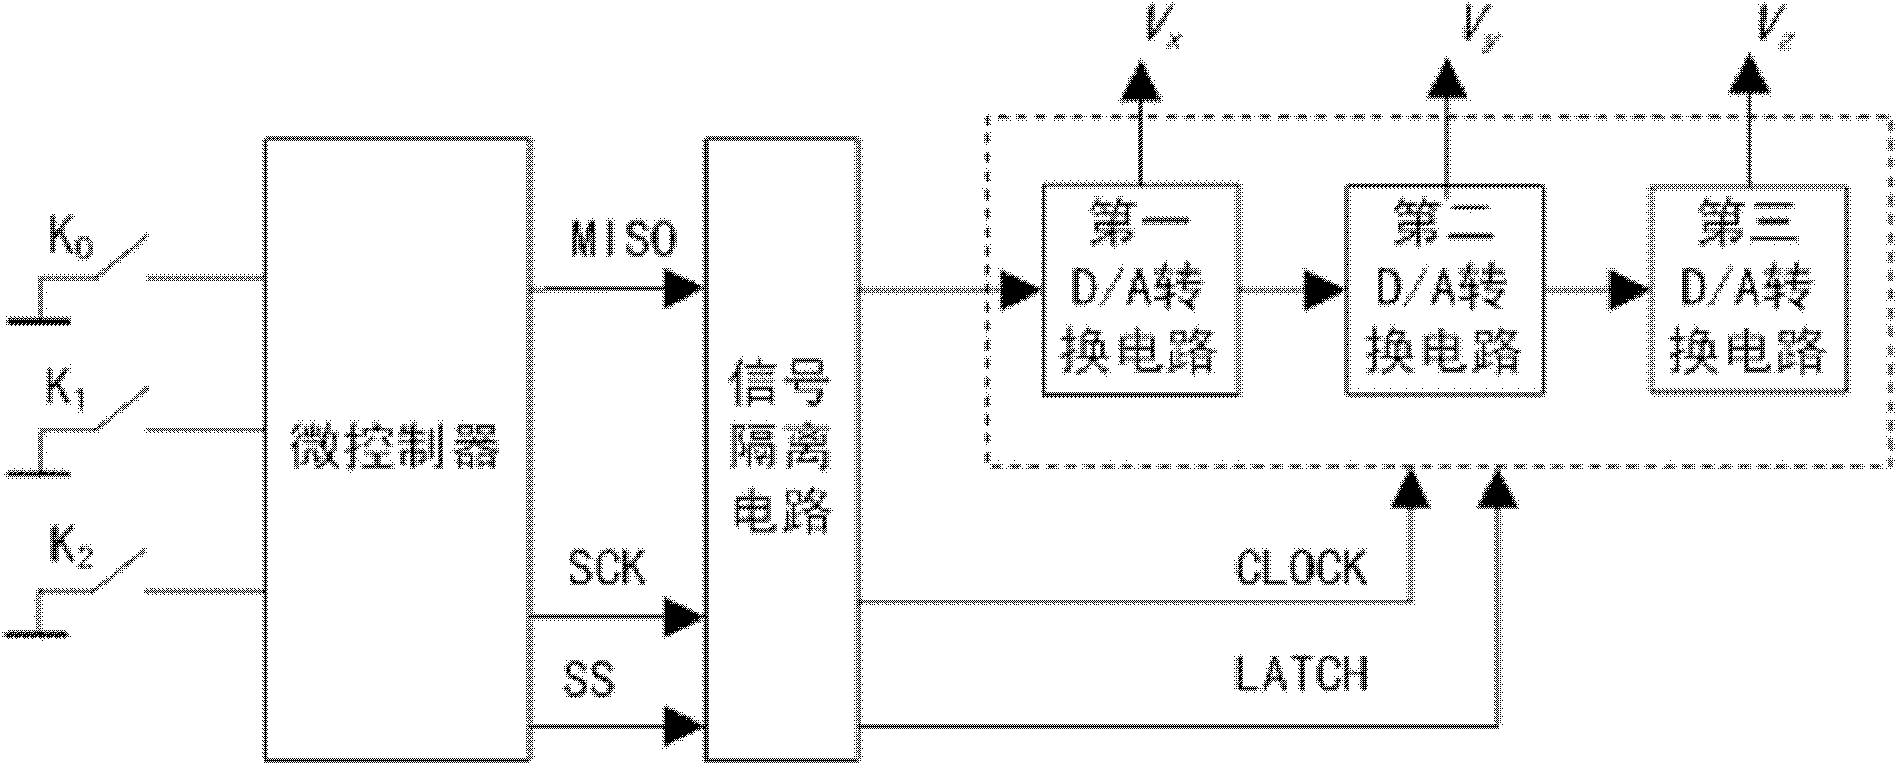 Chaotic signal generating circuit